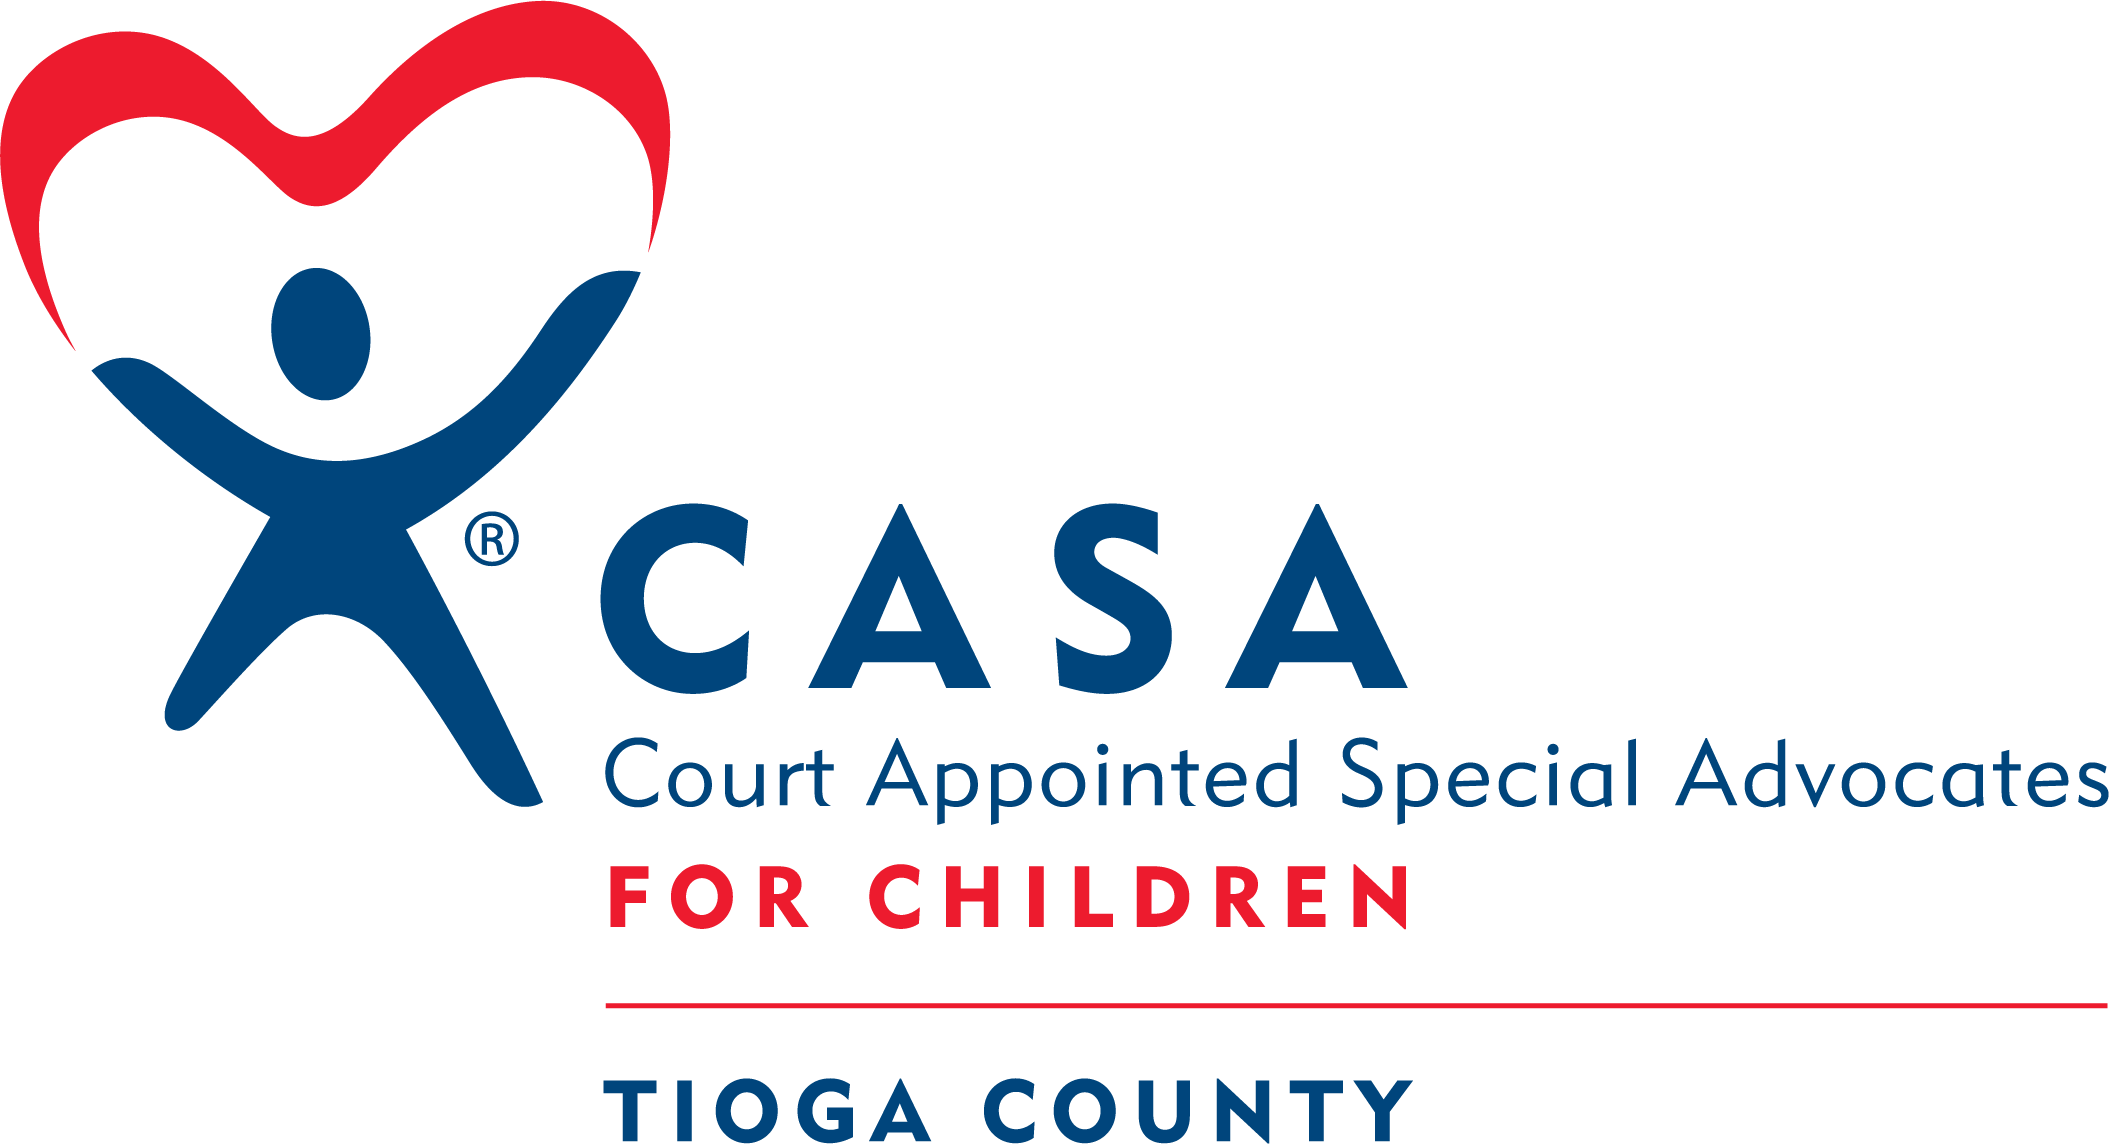 Tioga County CASA